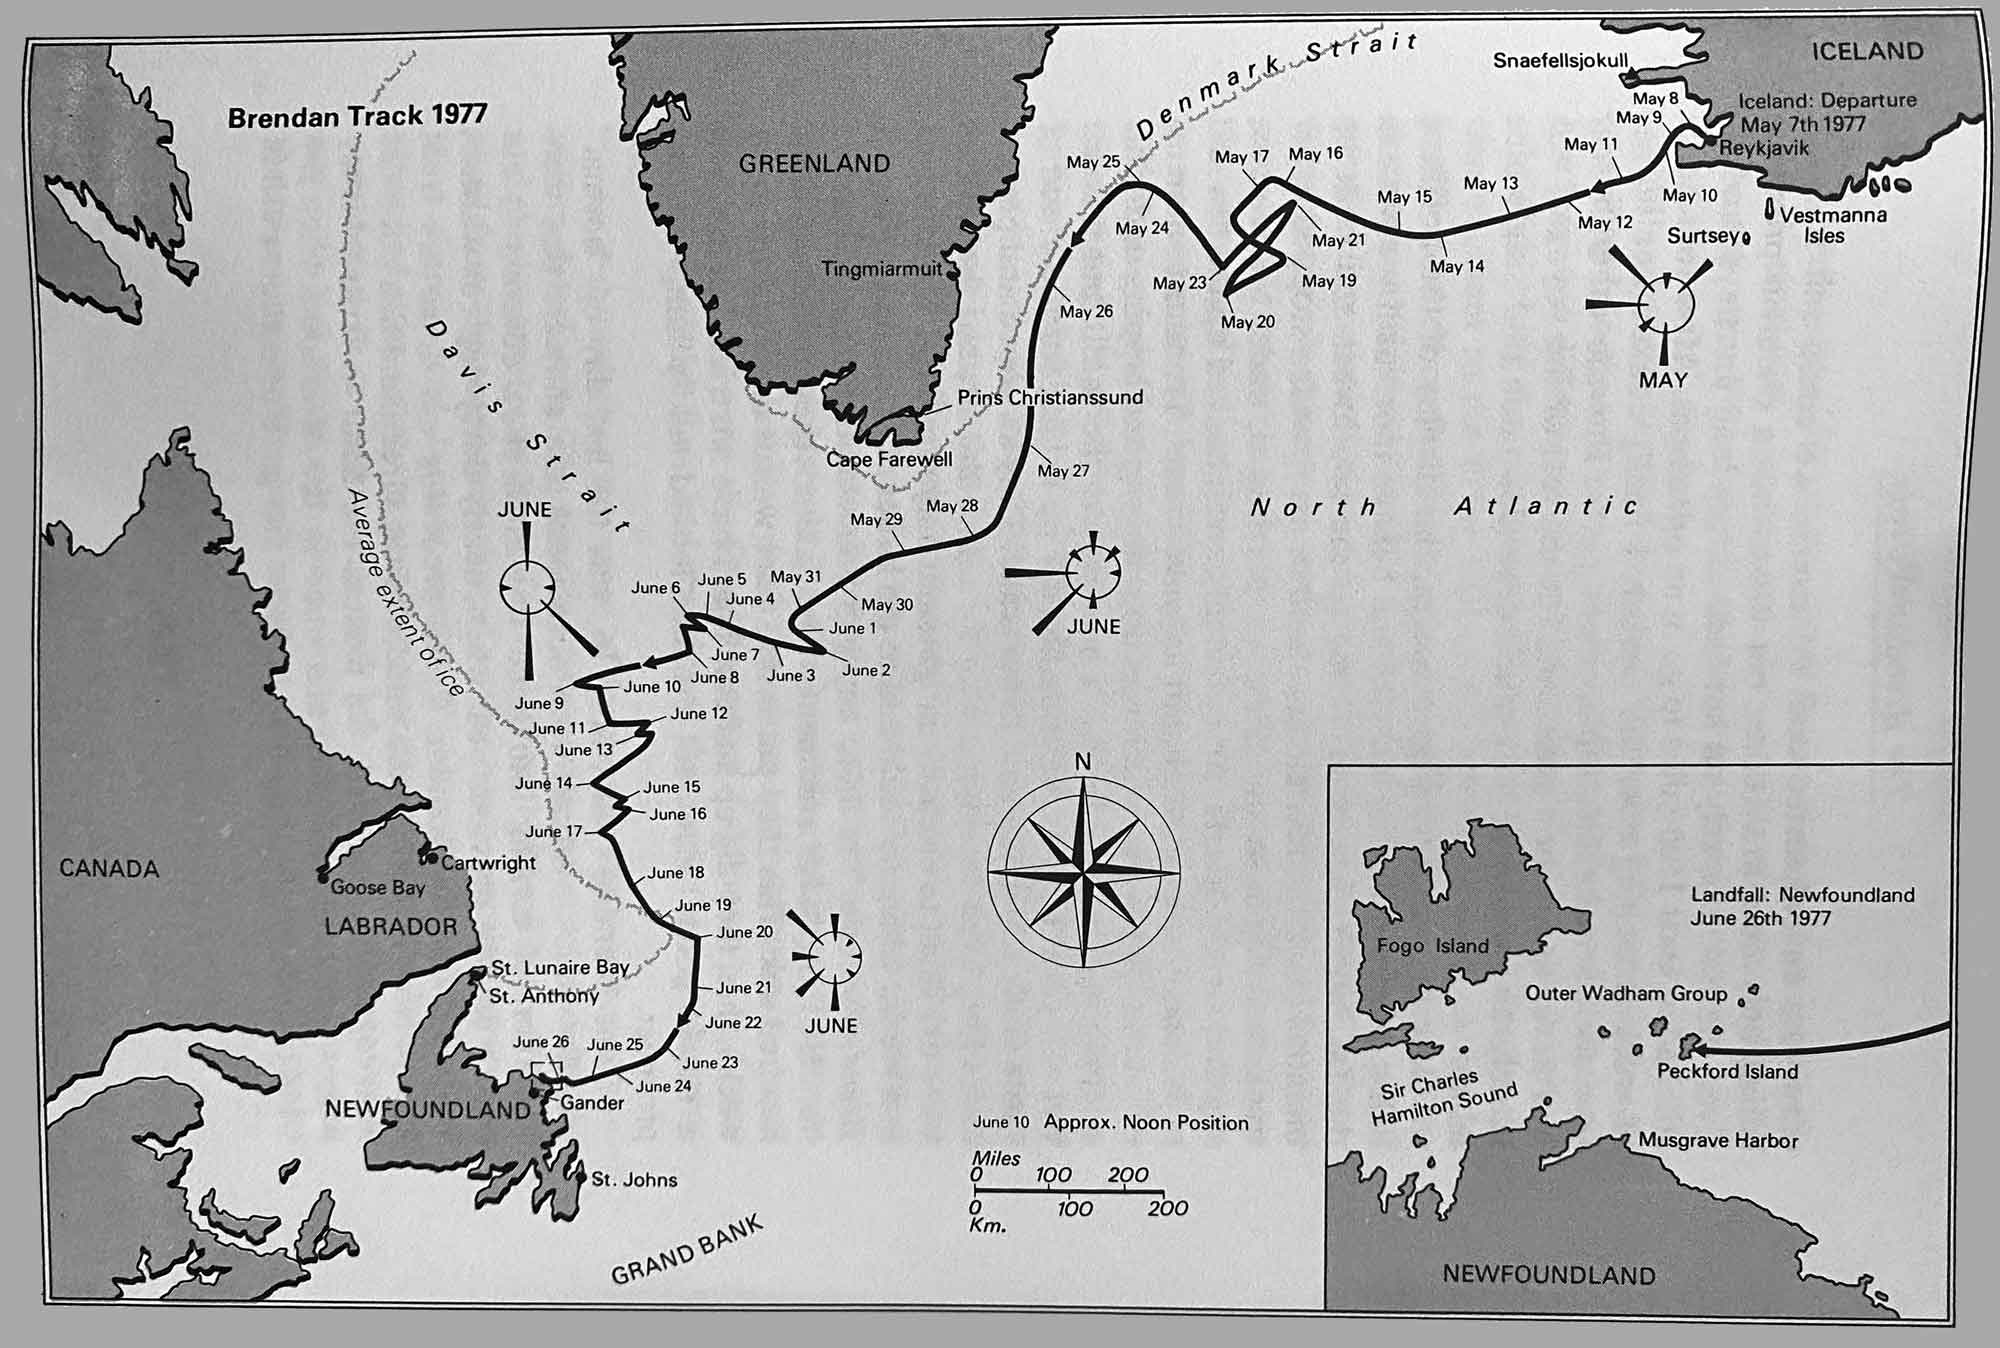 st brendan's voyage map